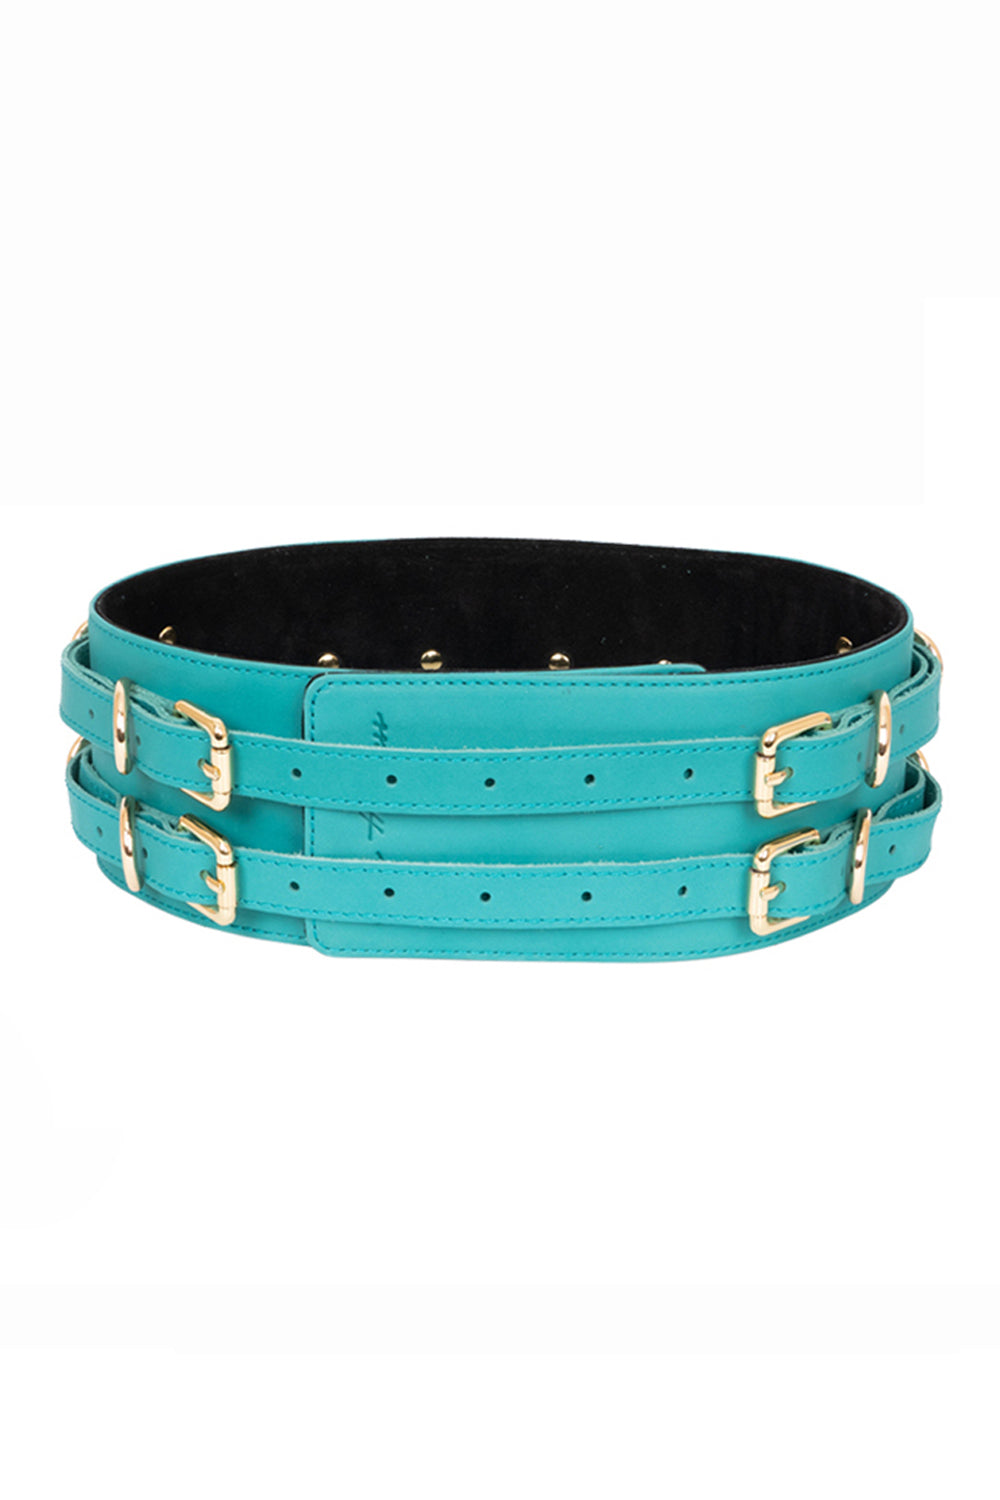 "Crazy Horse" Leather Waist Belt. Turquoise